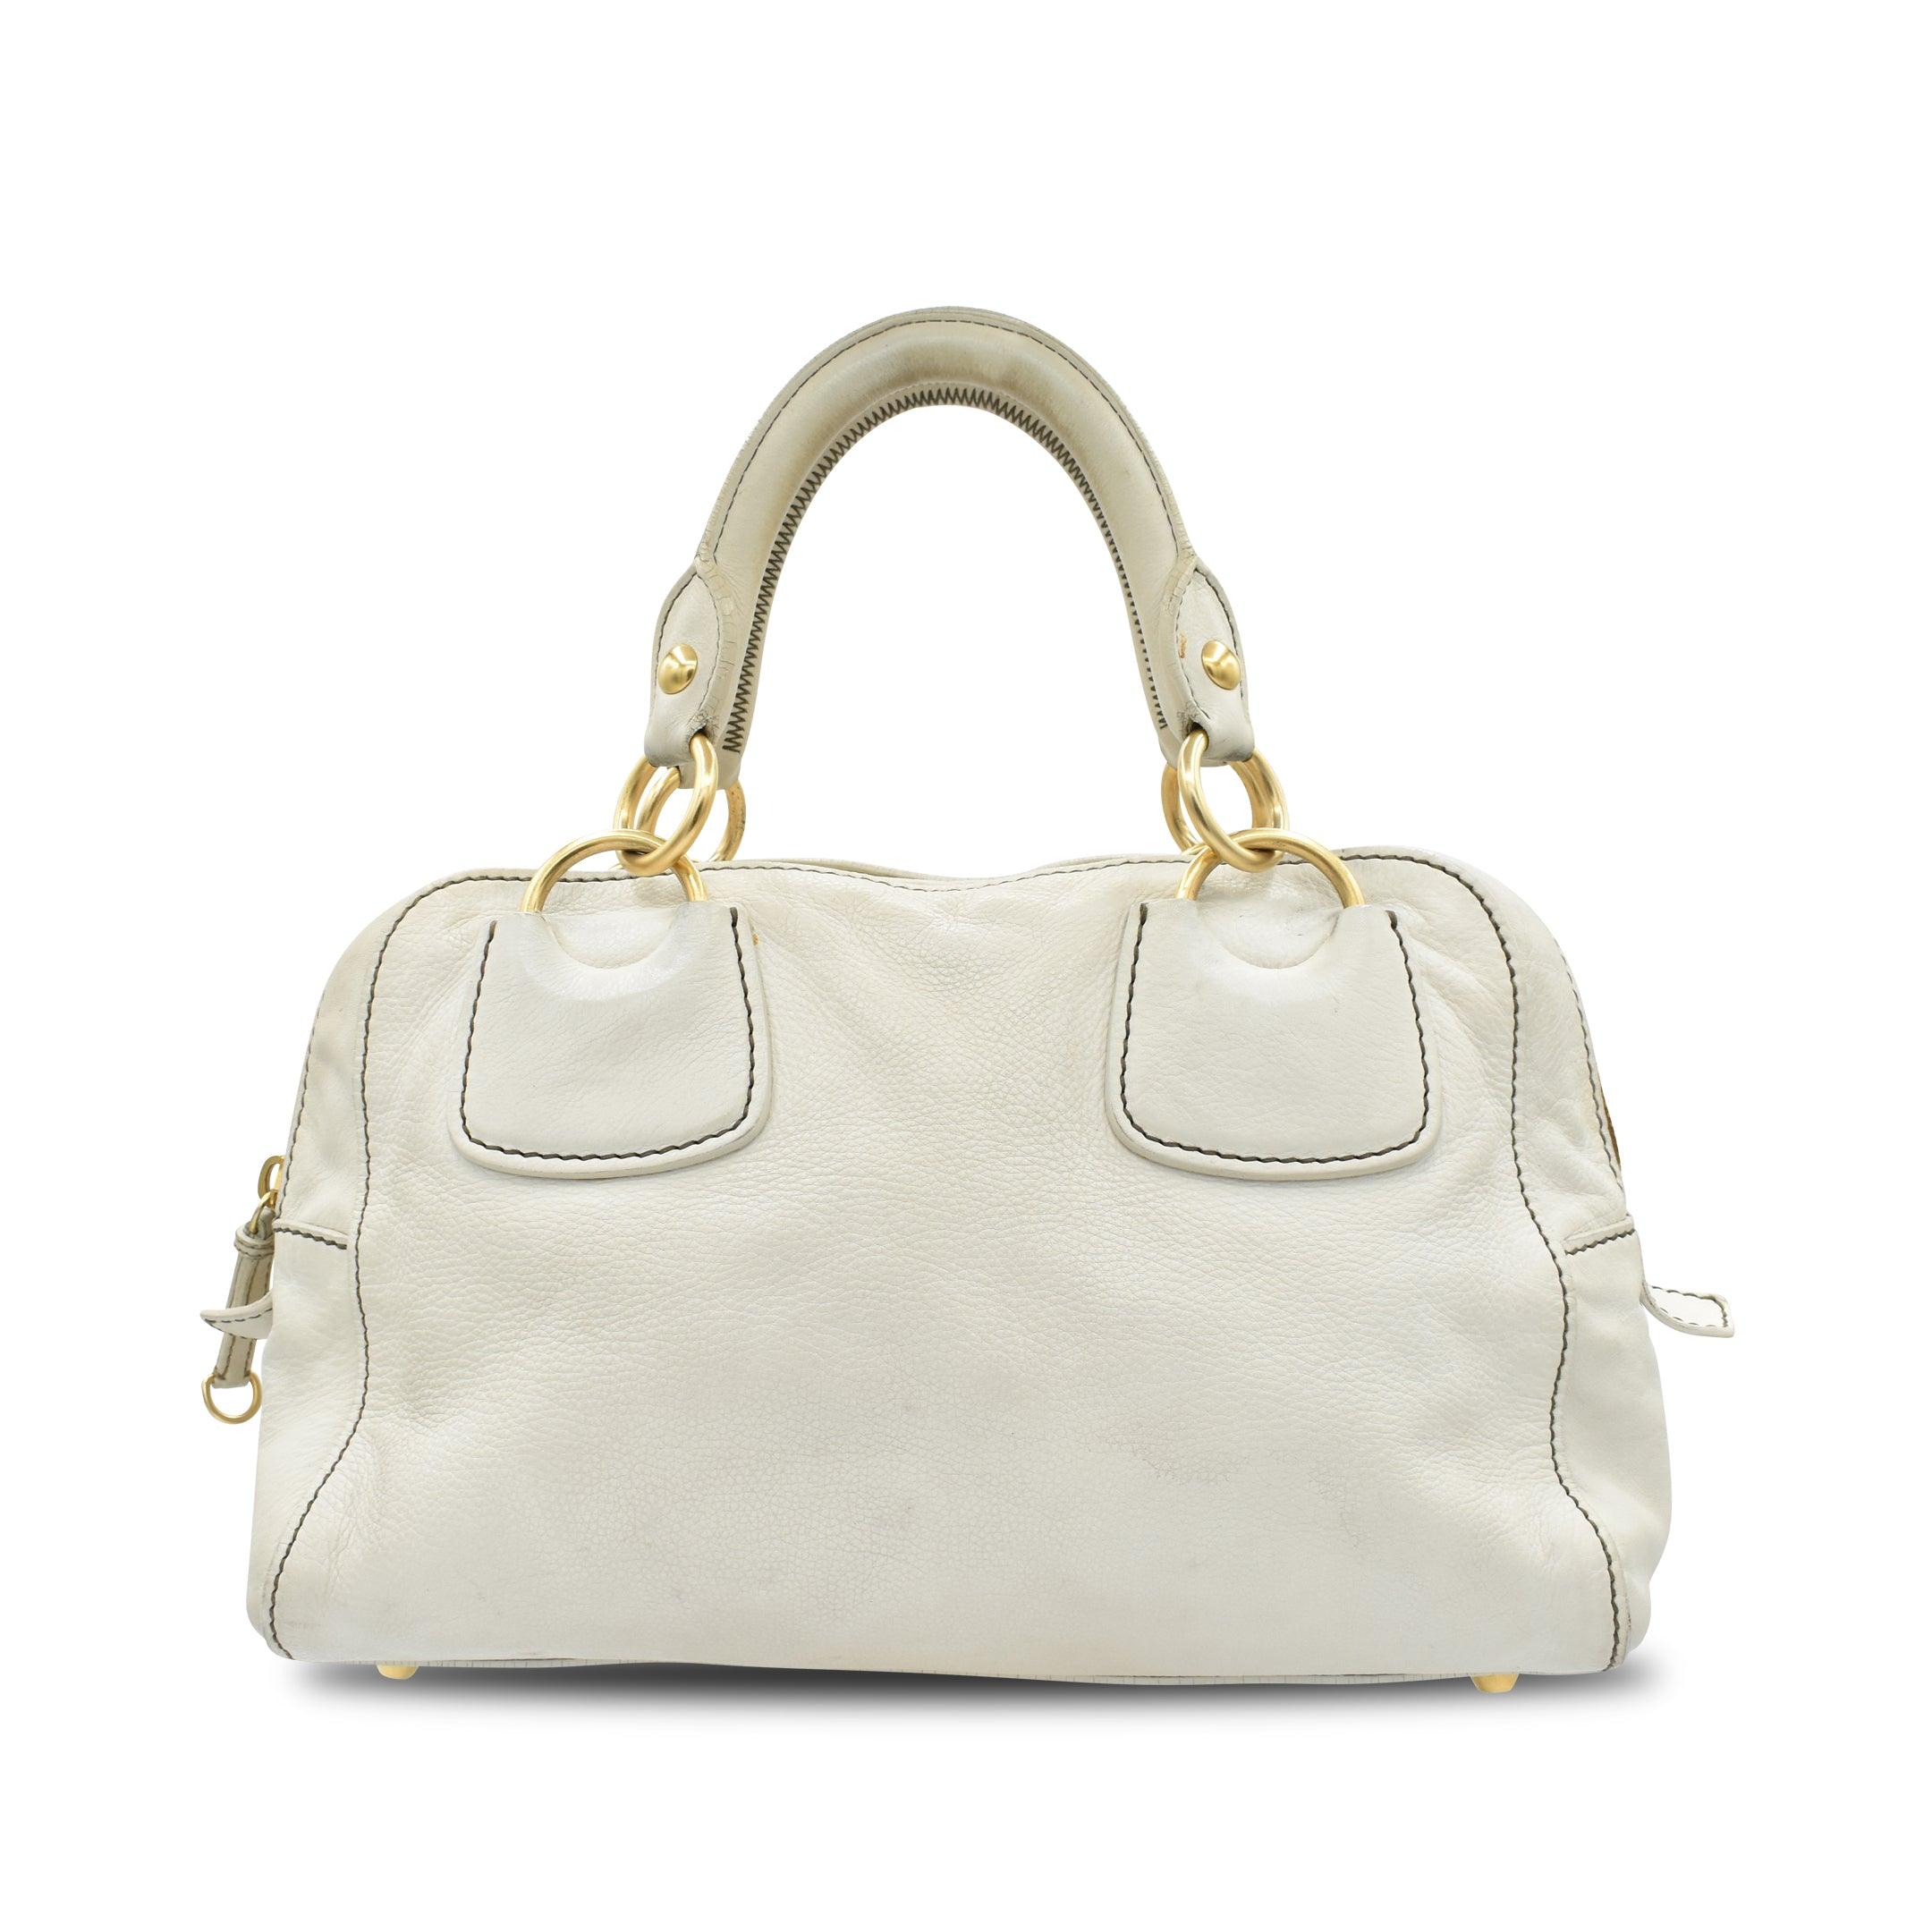 what is the name of this miu miu bag? : r/handbags